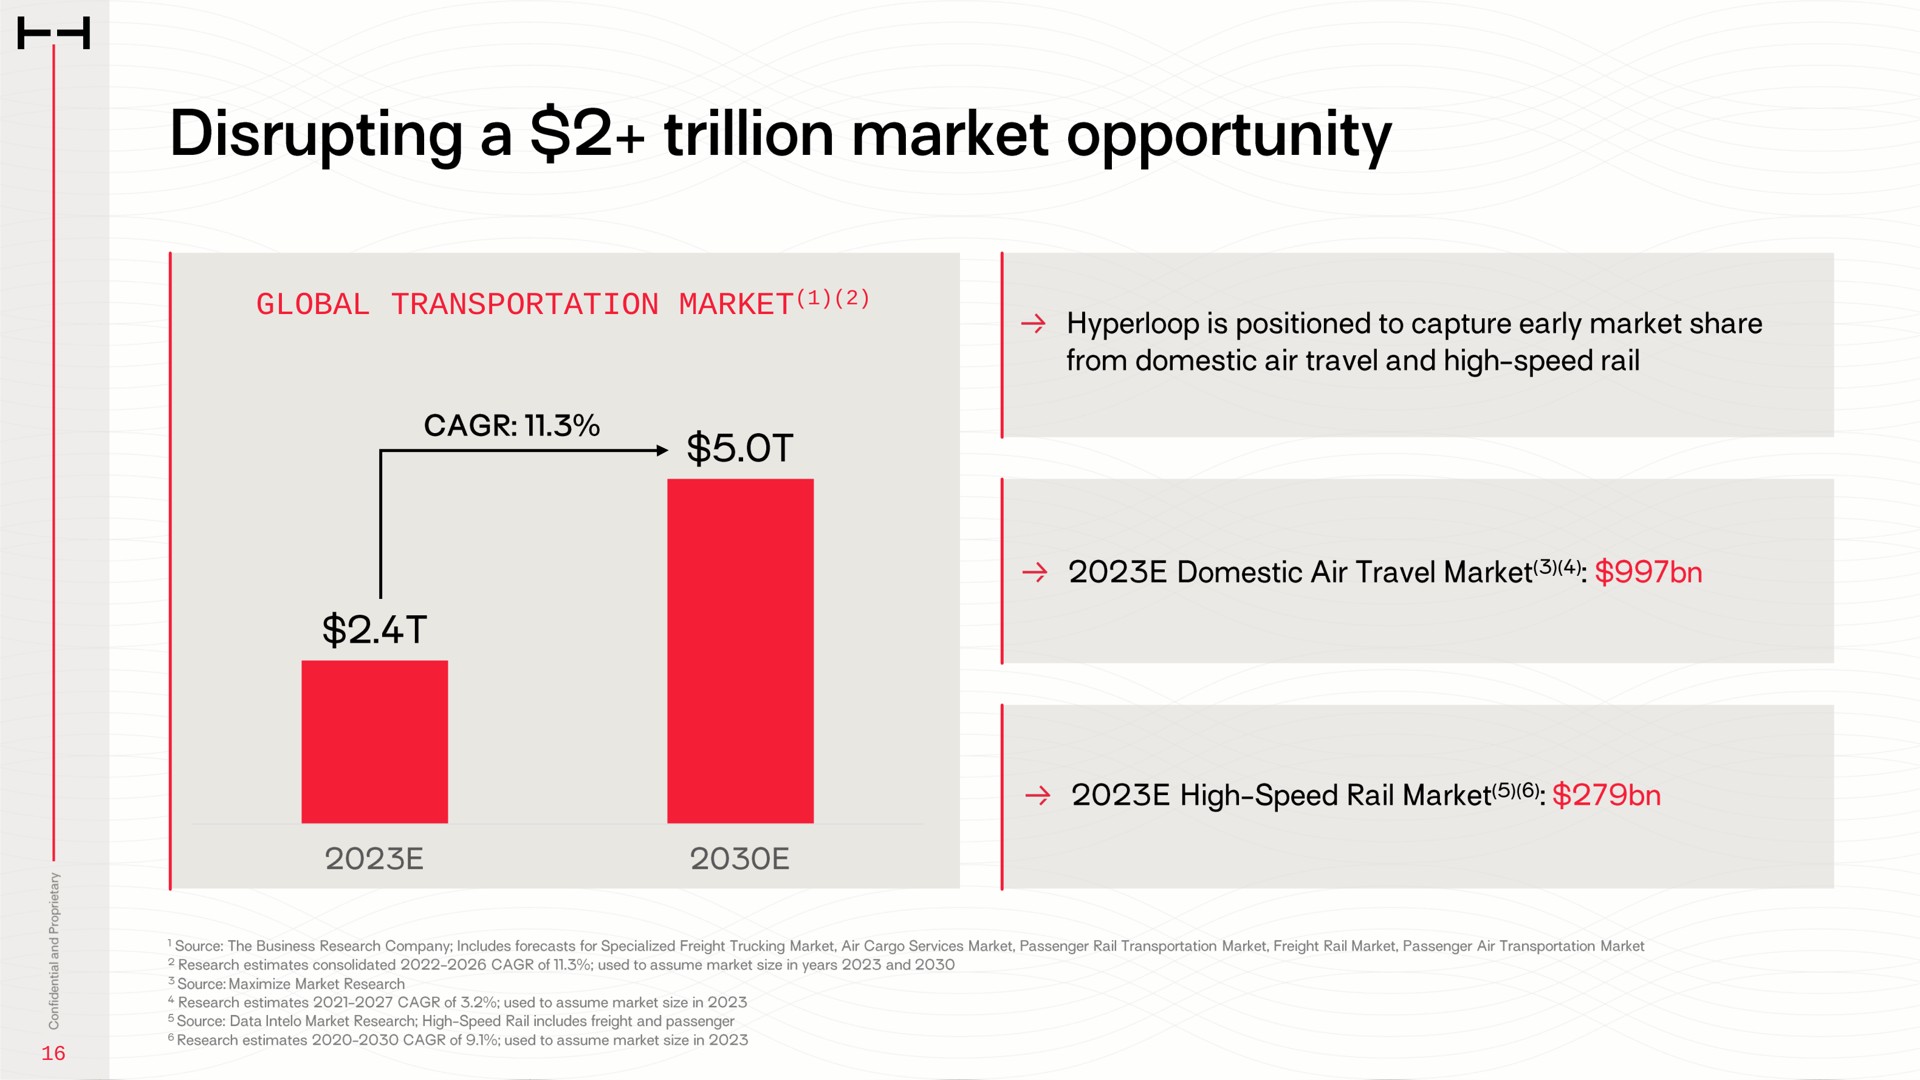 global transportation market disrupting a trillion opportunity | HyperloopTT